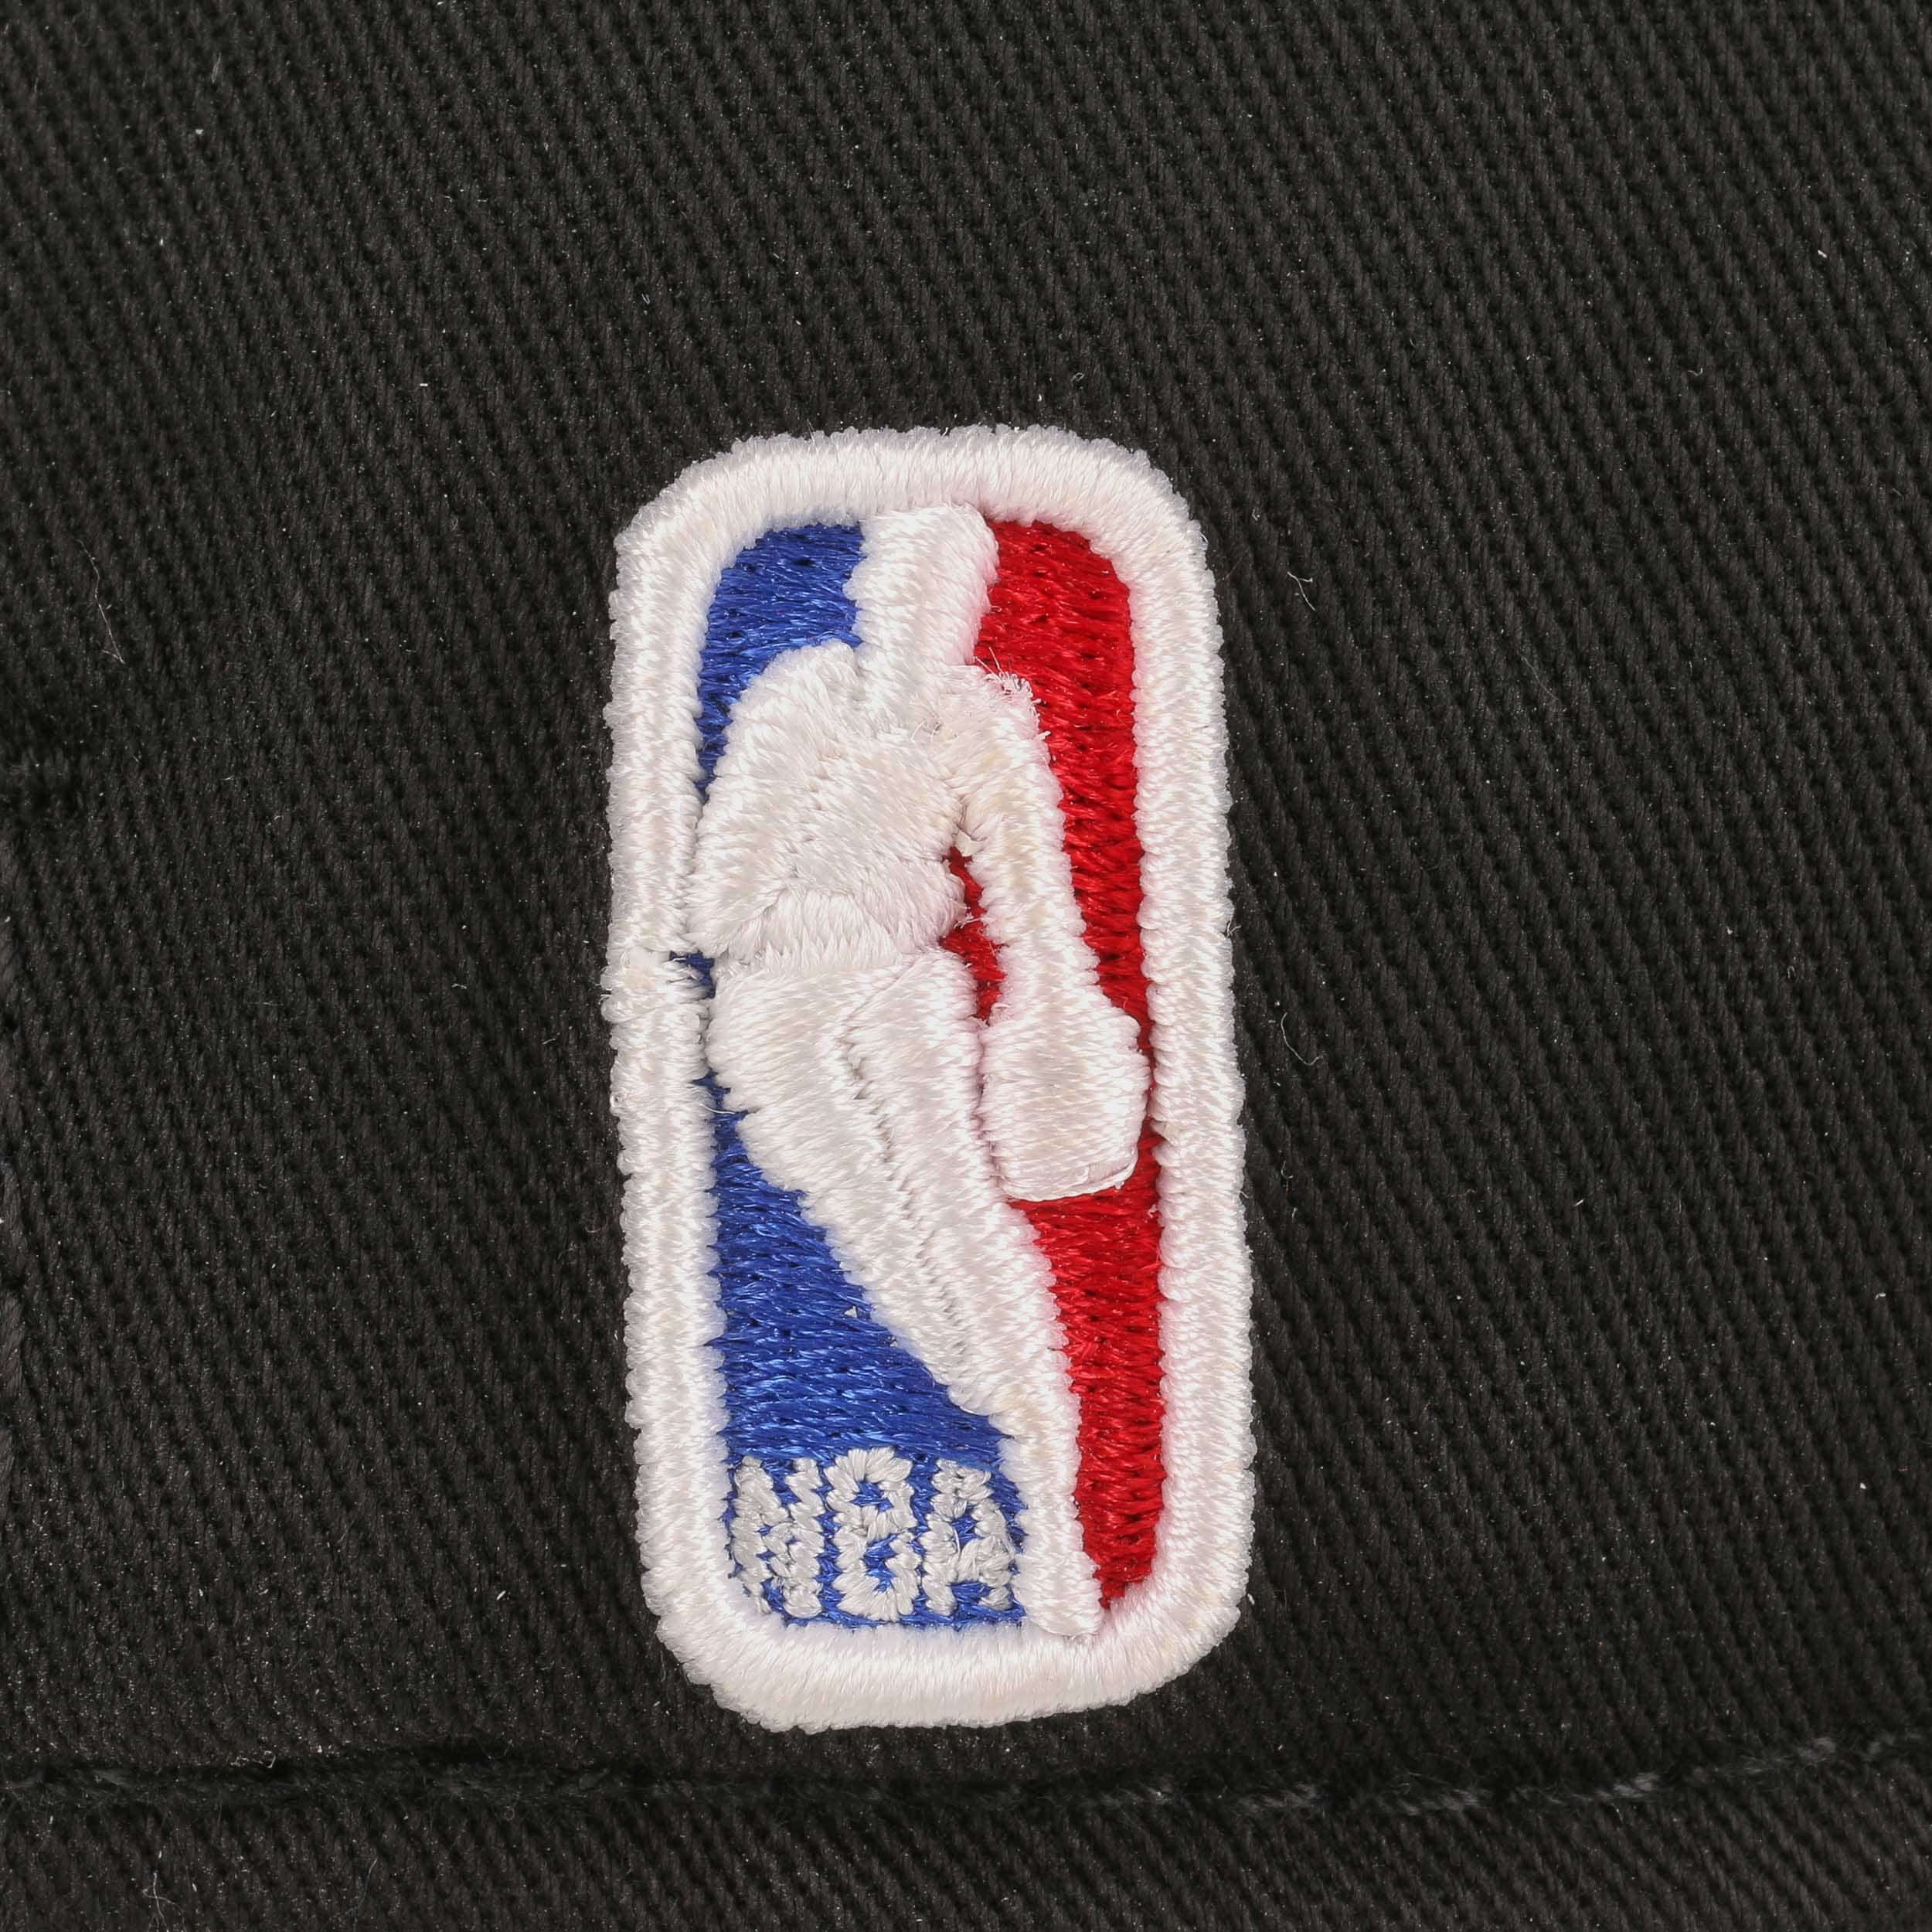 Brooklyn Nets Fitted Caps - Brooklyn Nets gear: 2021 NBA Playoffs ...